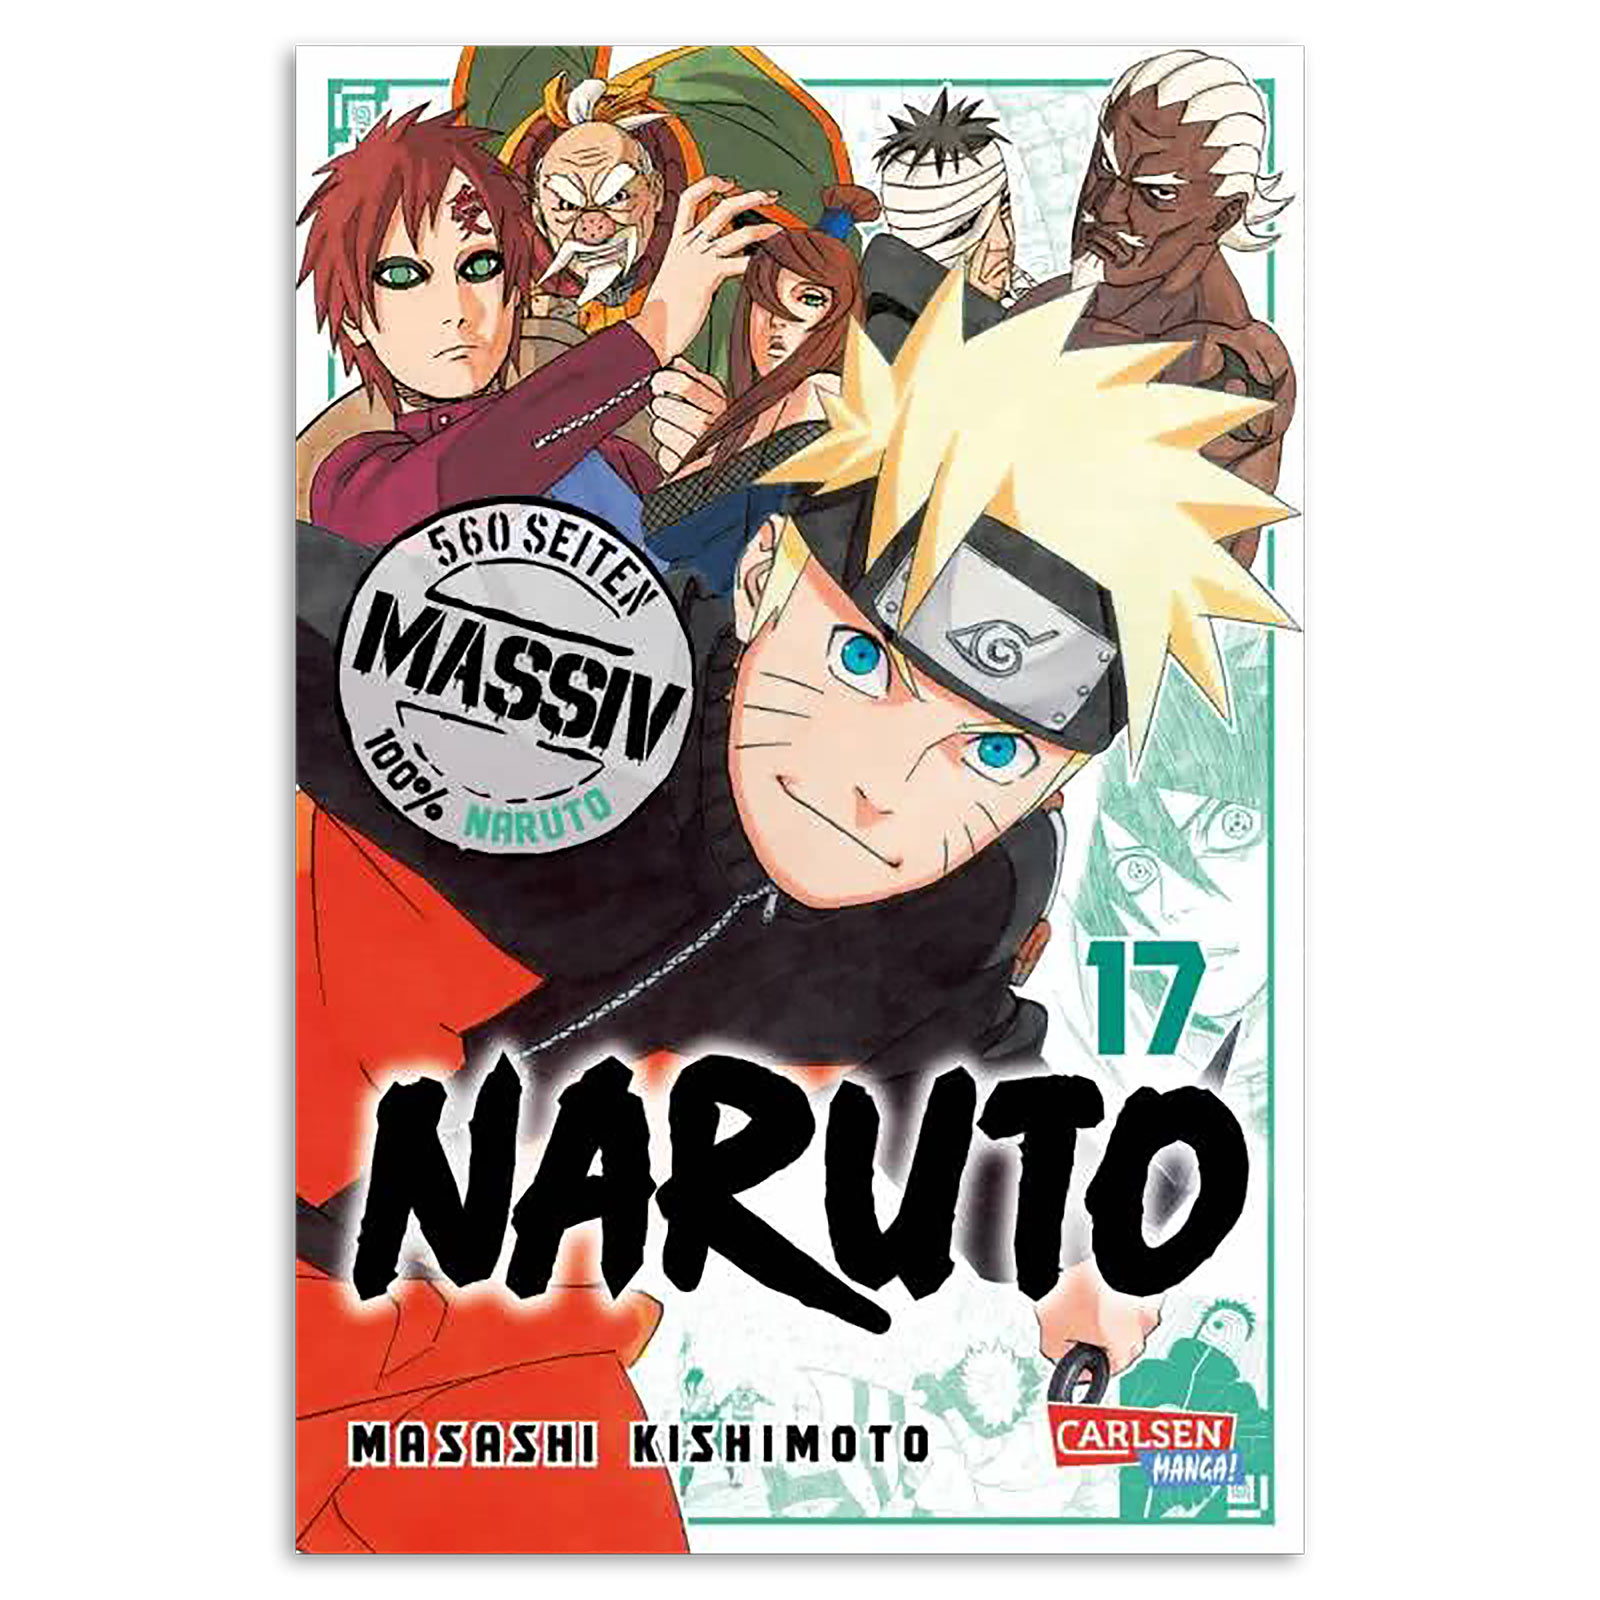 Naruto - Collection Volume 17 Paperback